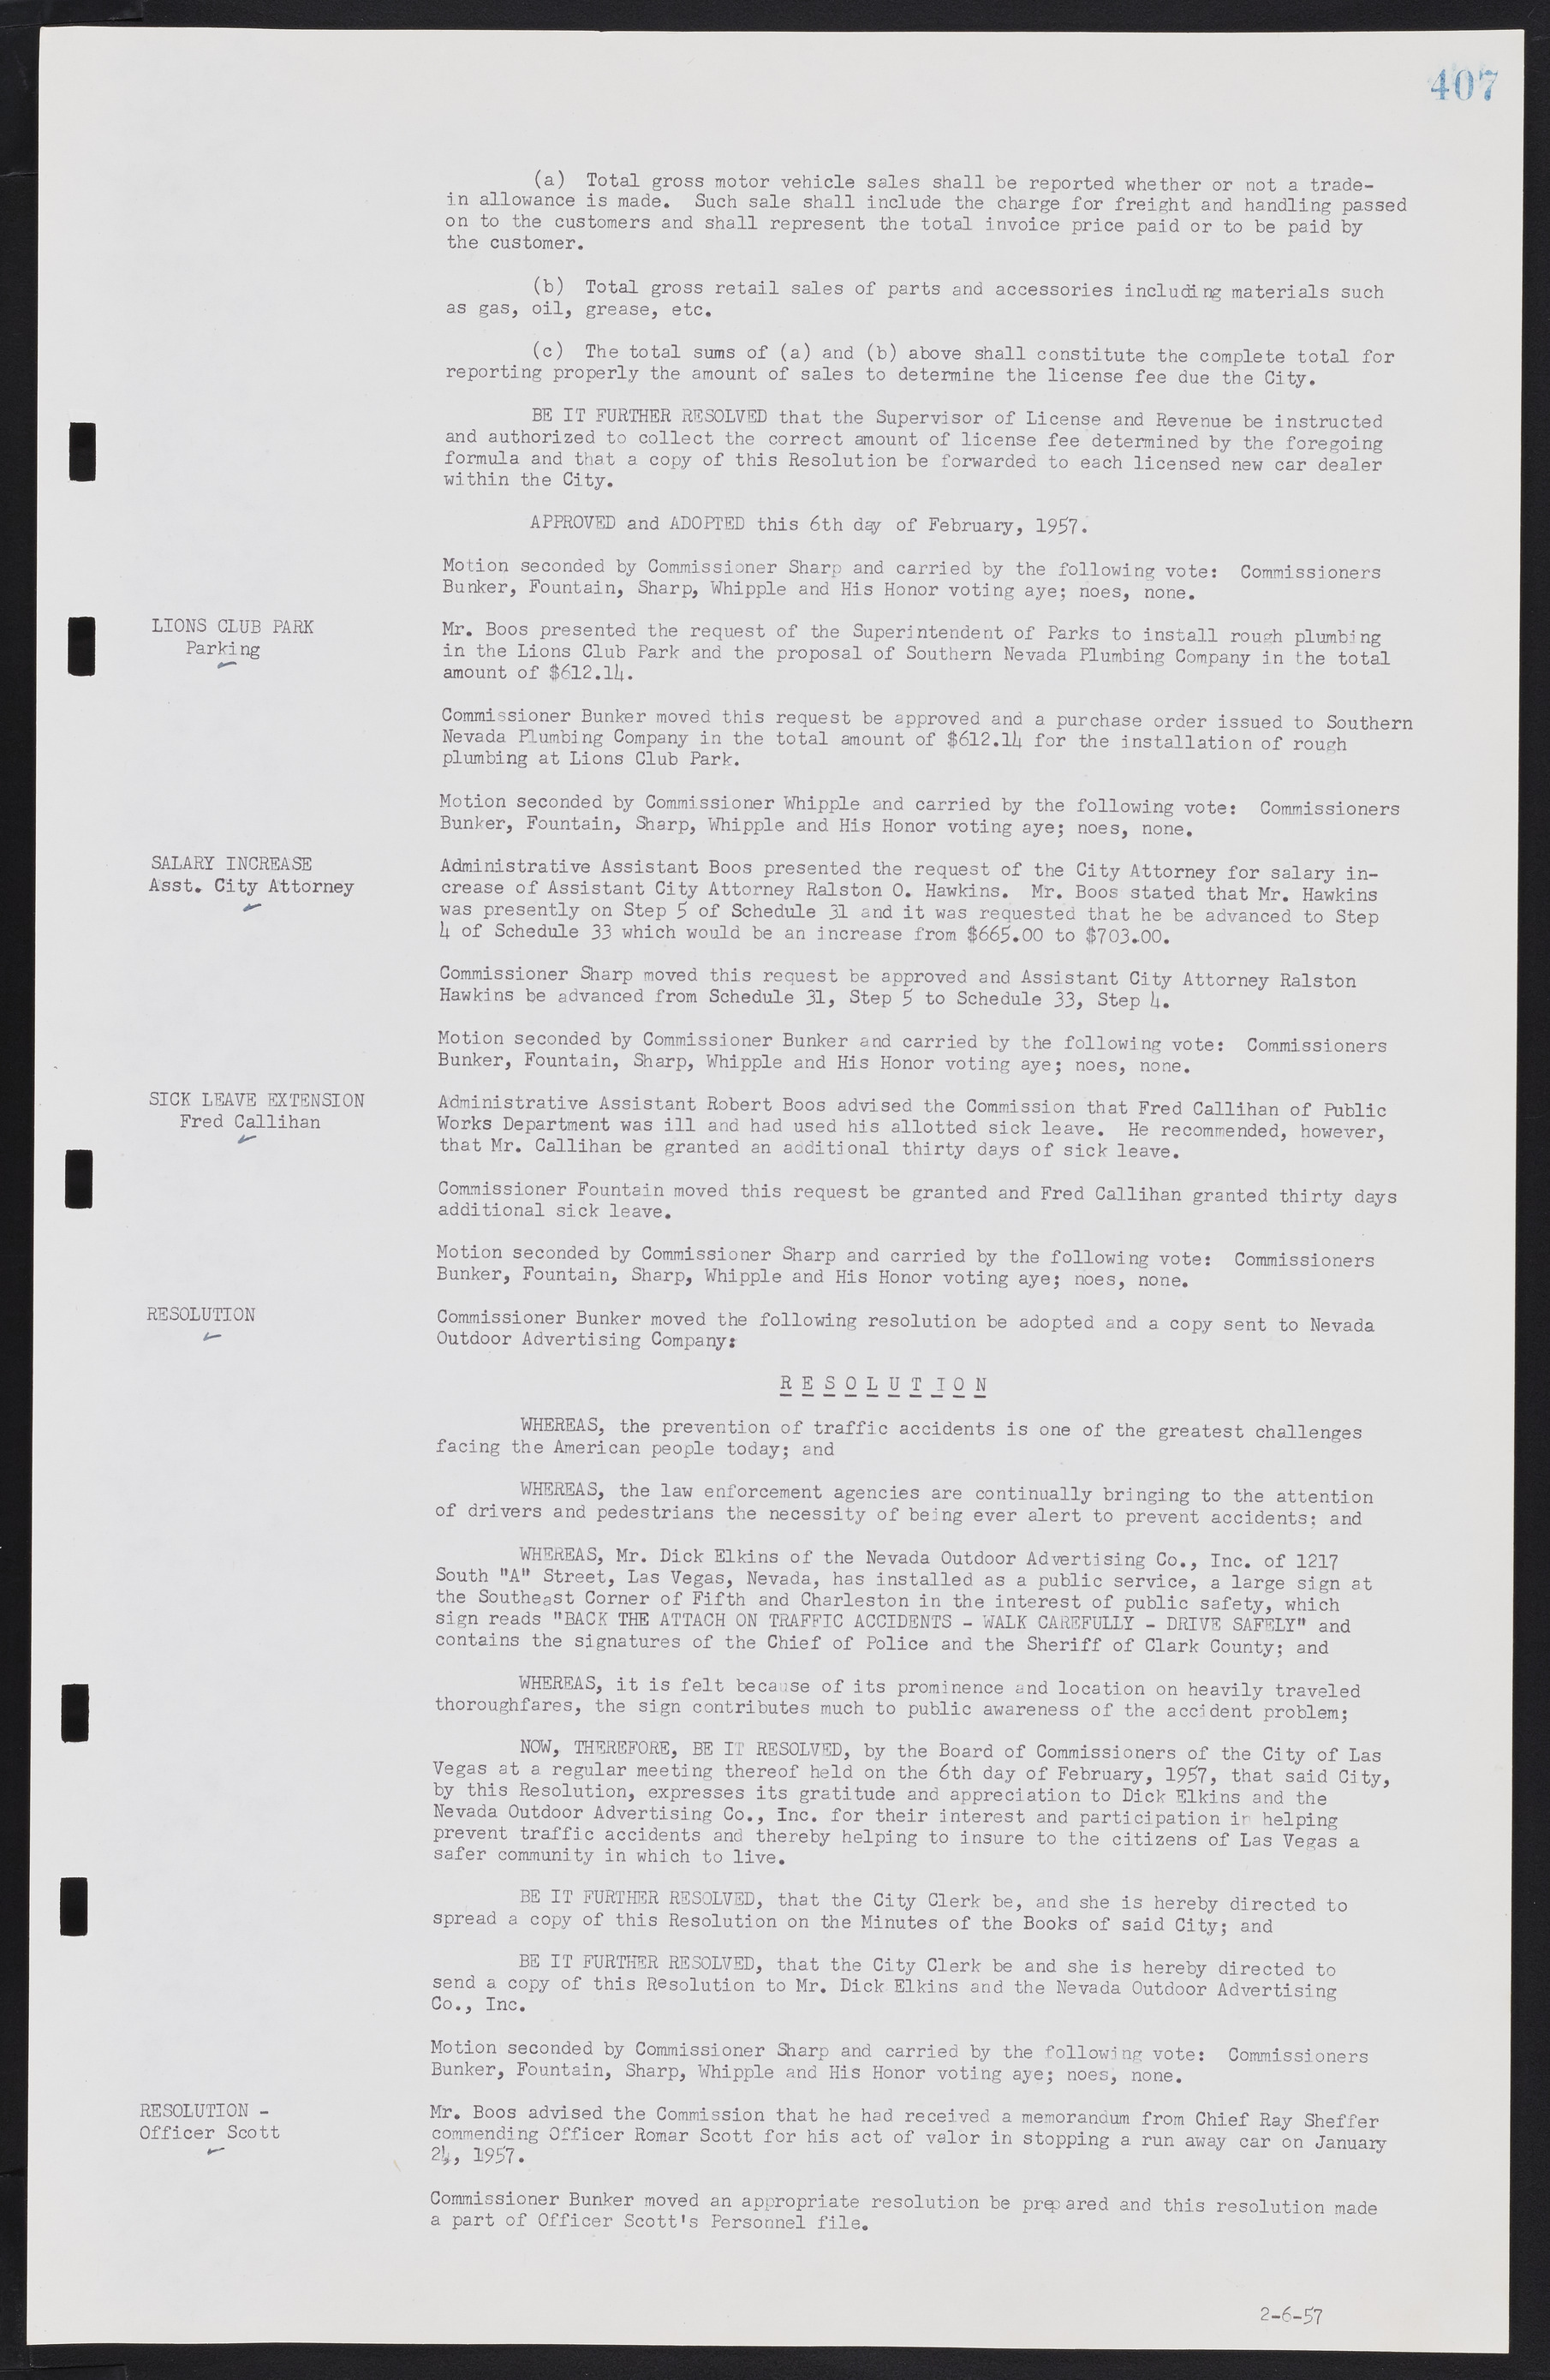 Las Vegas City Commission Minutes, September 21, 1955 to November 20, 1957, lvc000010-427